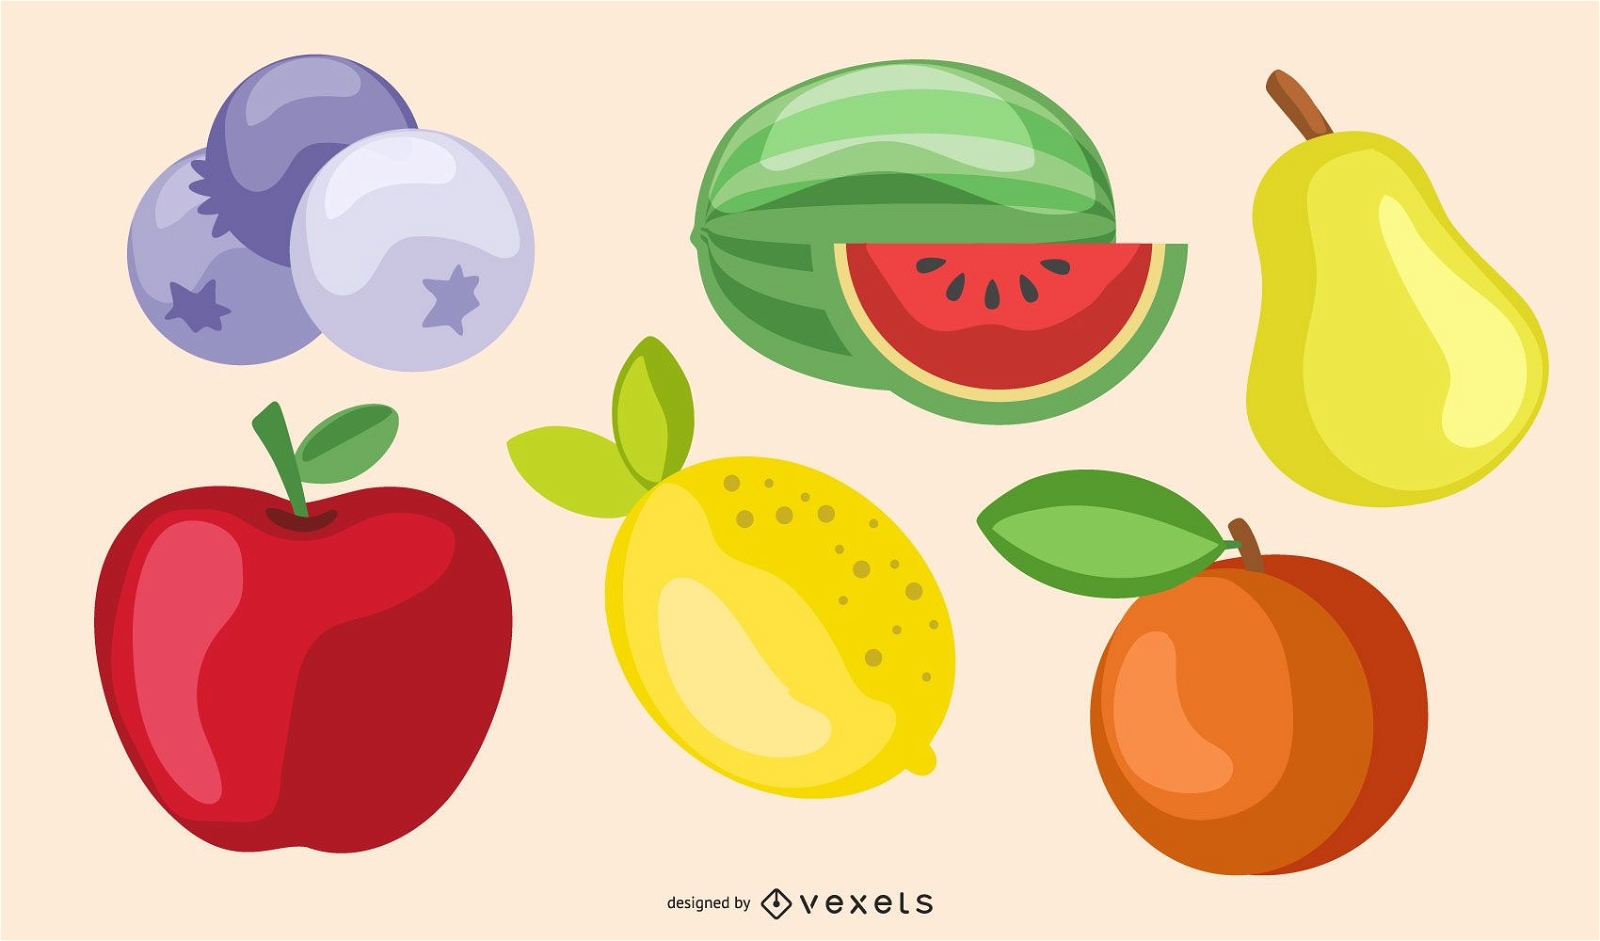 Glossy fruit illustration set